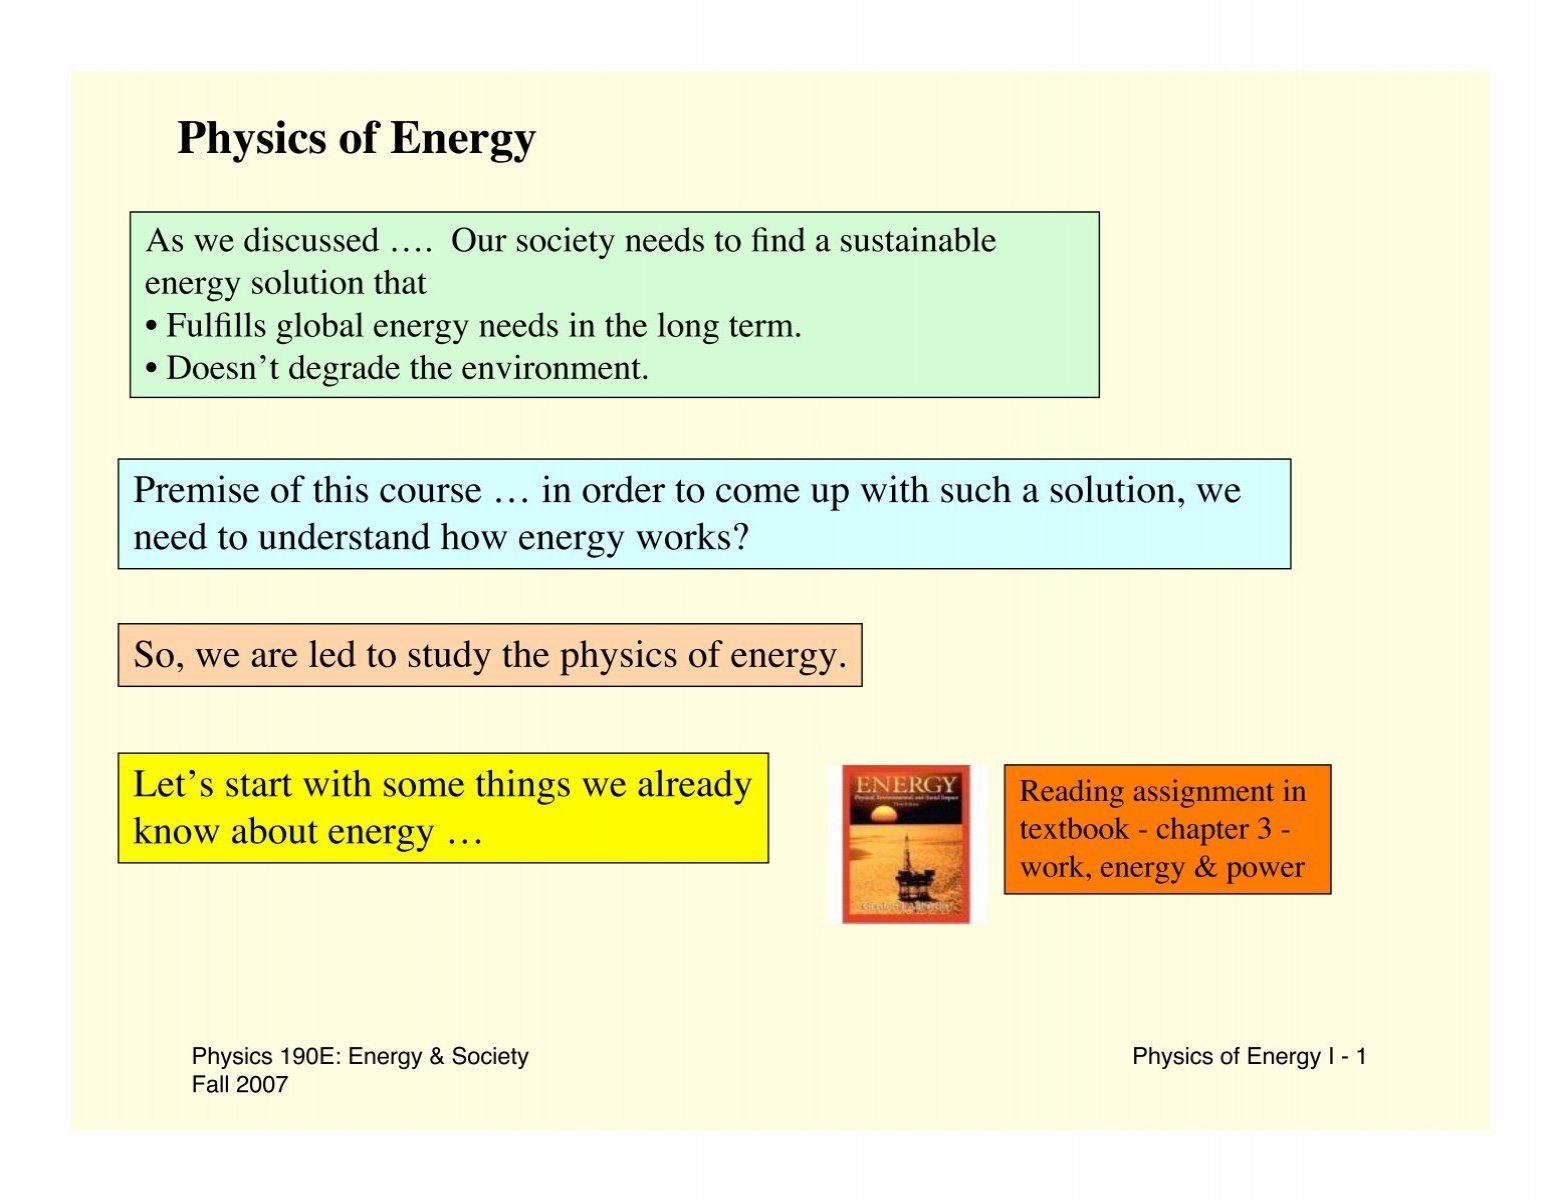 power physics examples